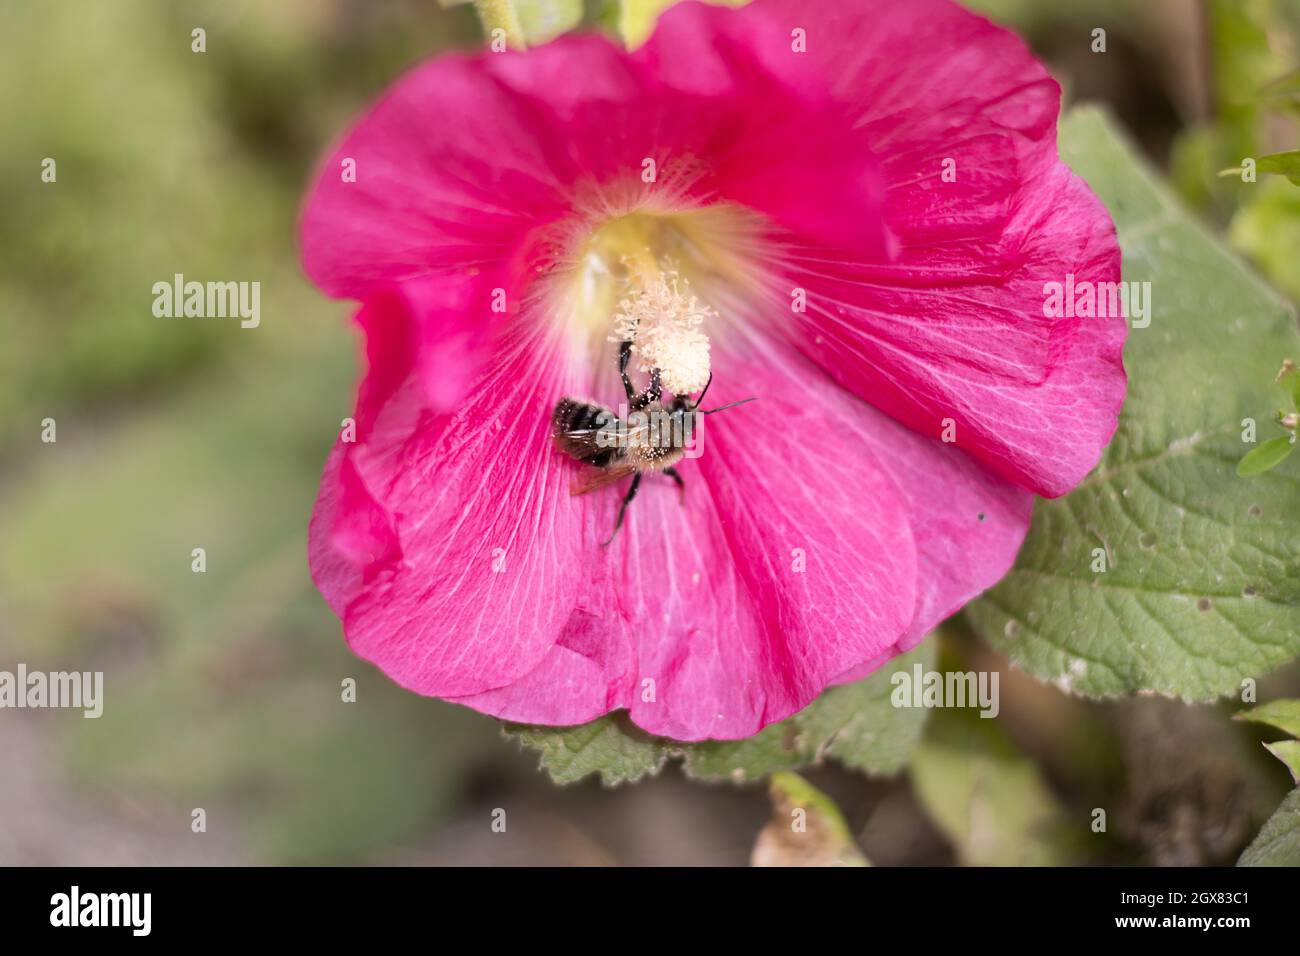 Bee sitting on petal pink flower Stock Photo